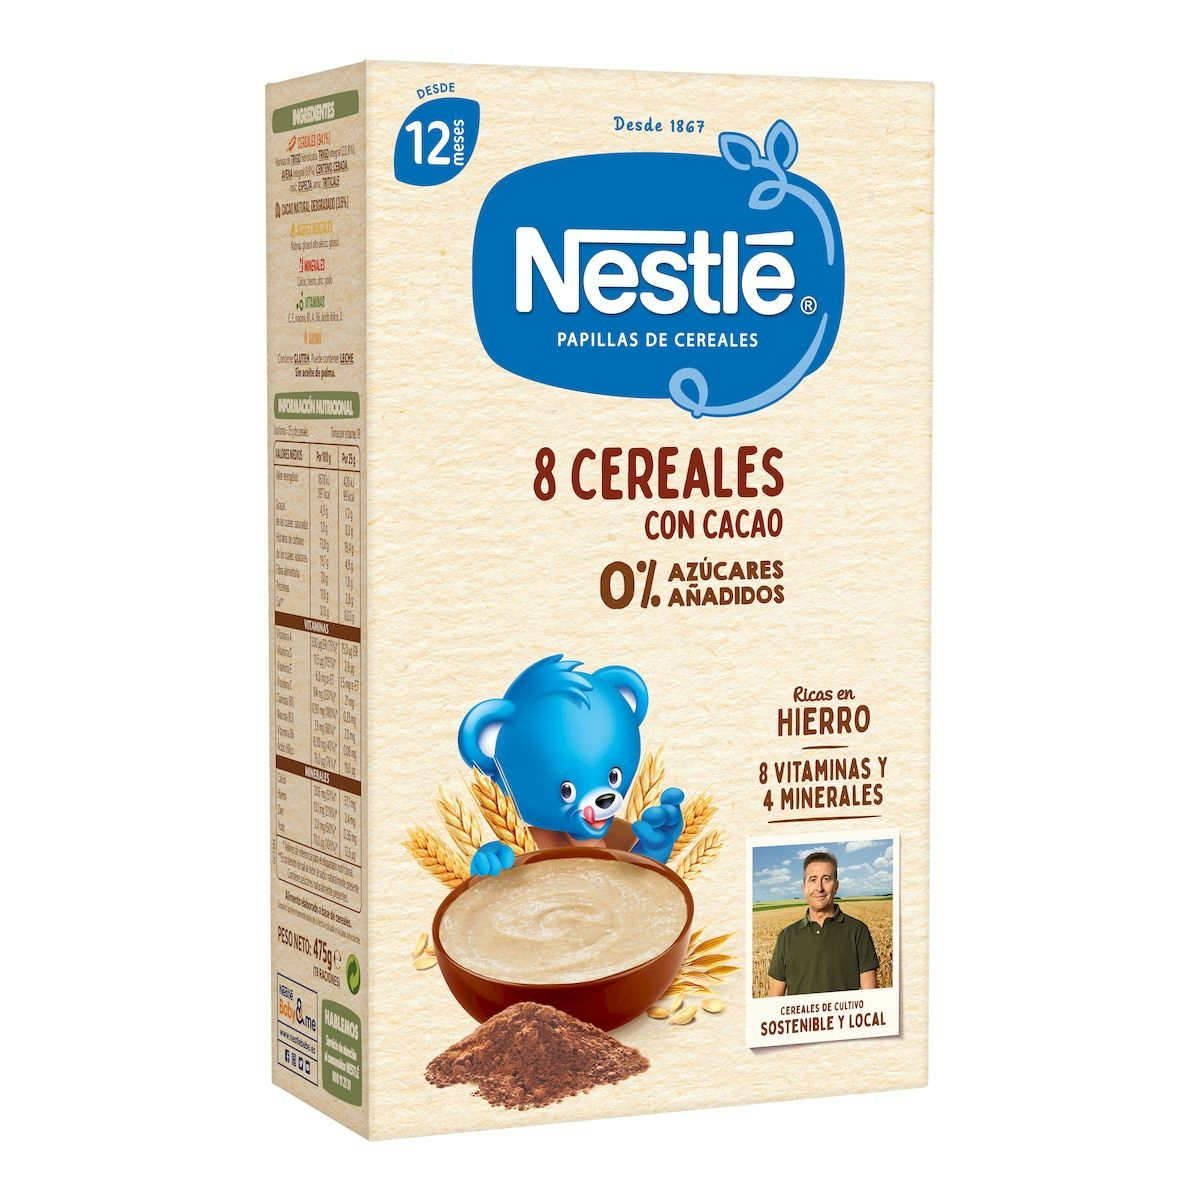 NESTLÉ Papilla 8 Cereales con Cacao, a partir de los 12 meses, 475g